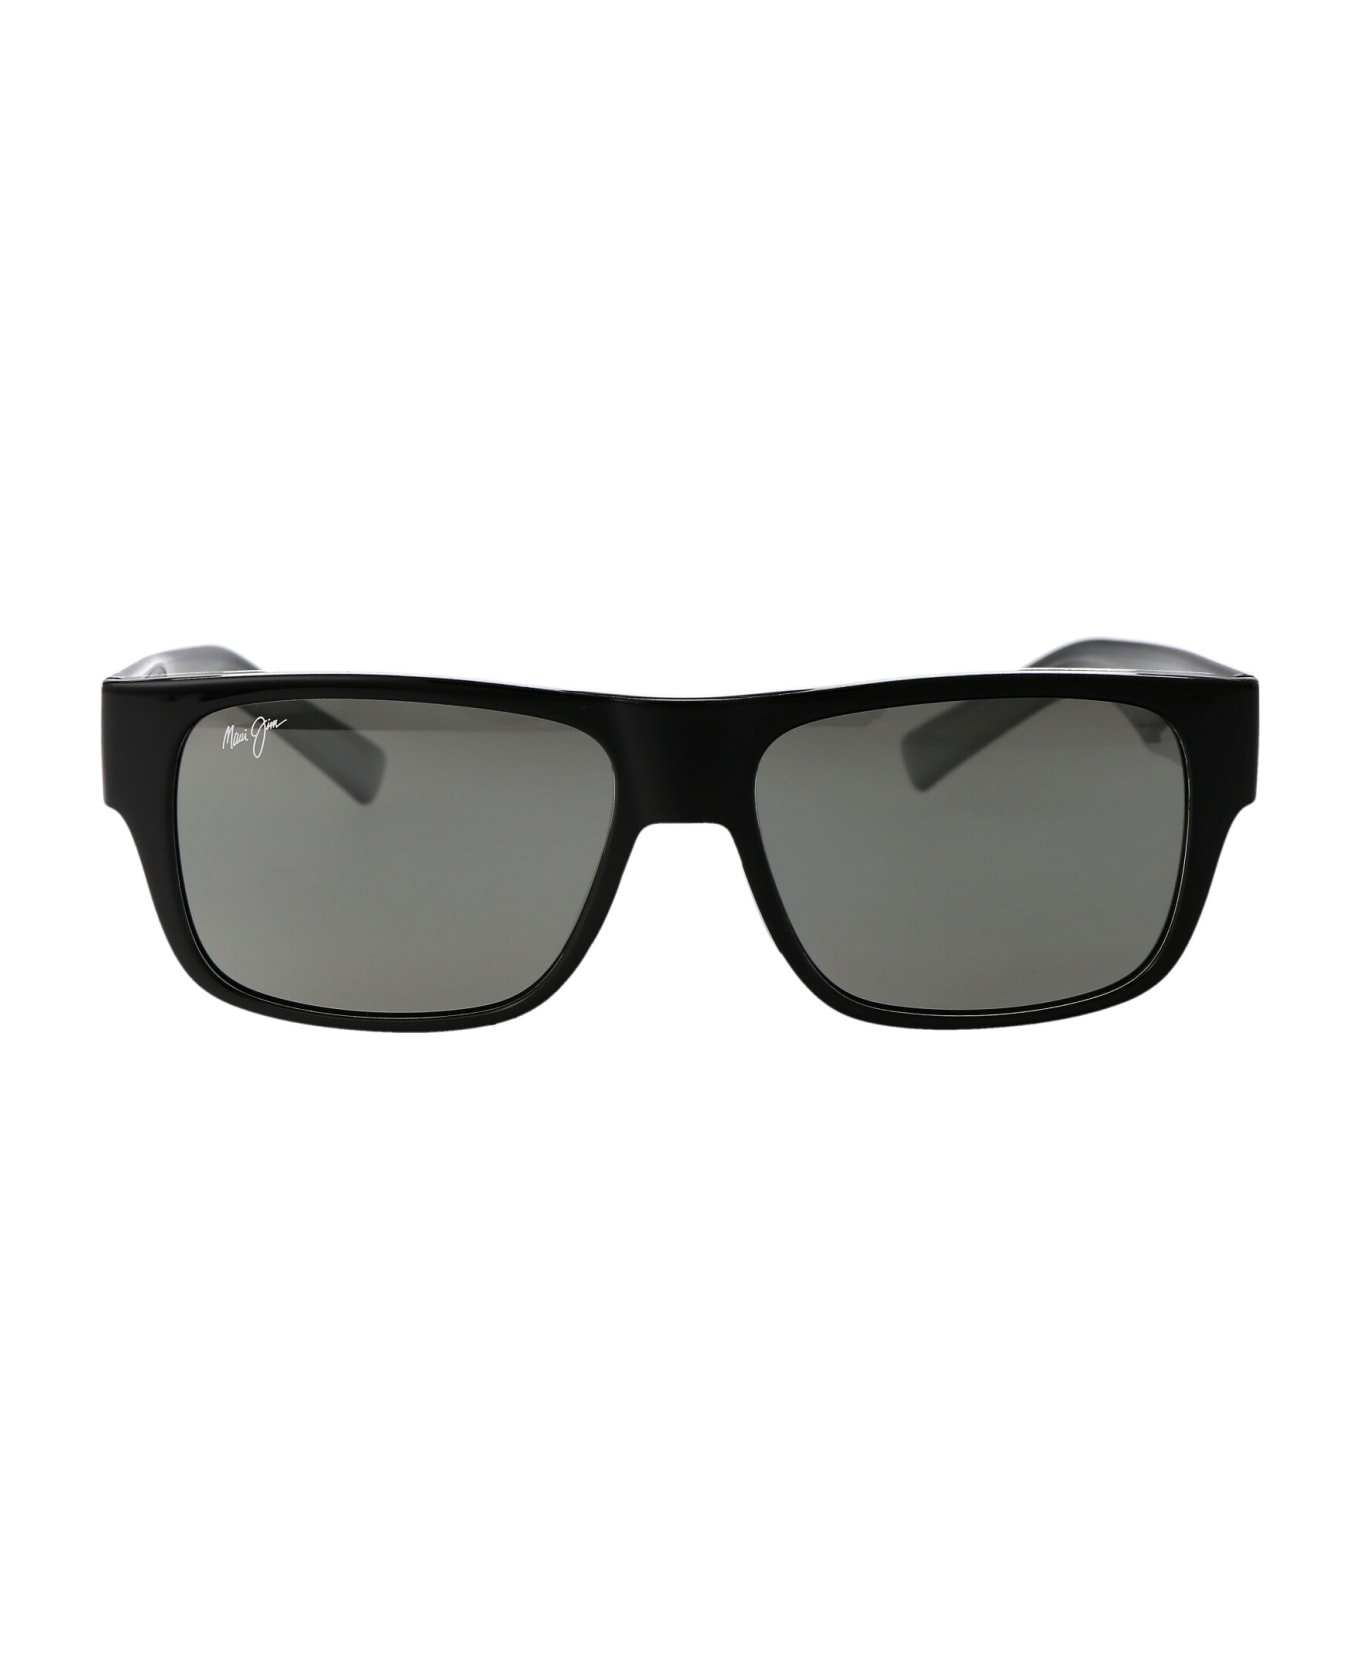 Maui Jim Keahi Sunglasses - 02 GREY BLACK GLOSS